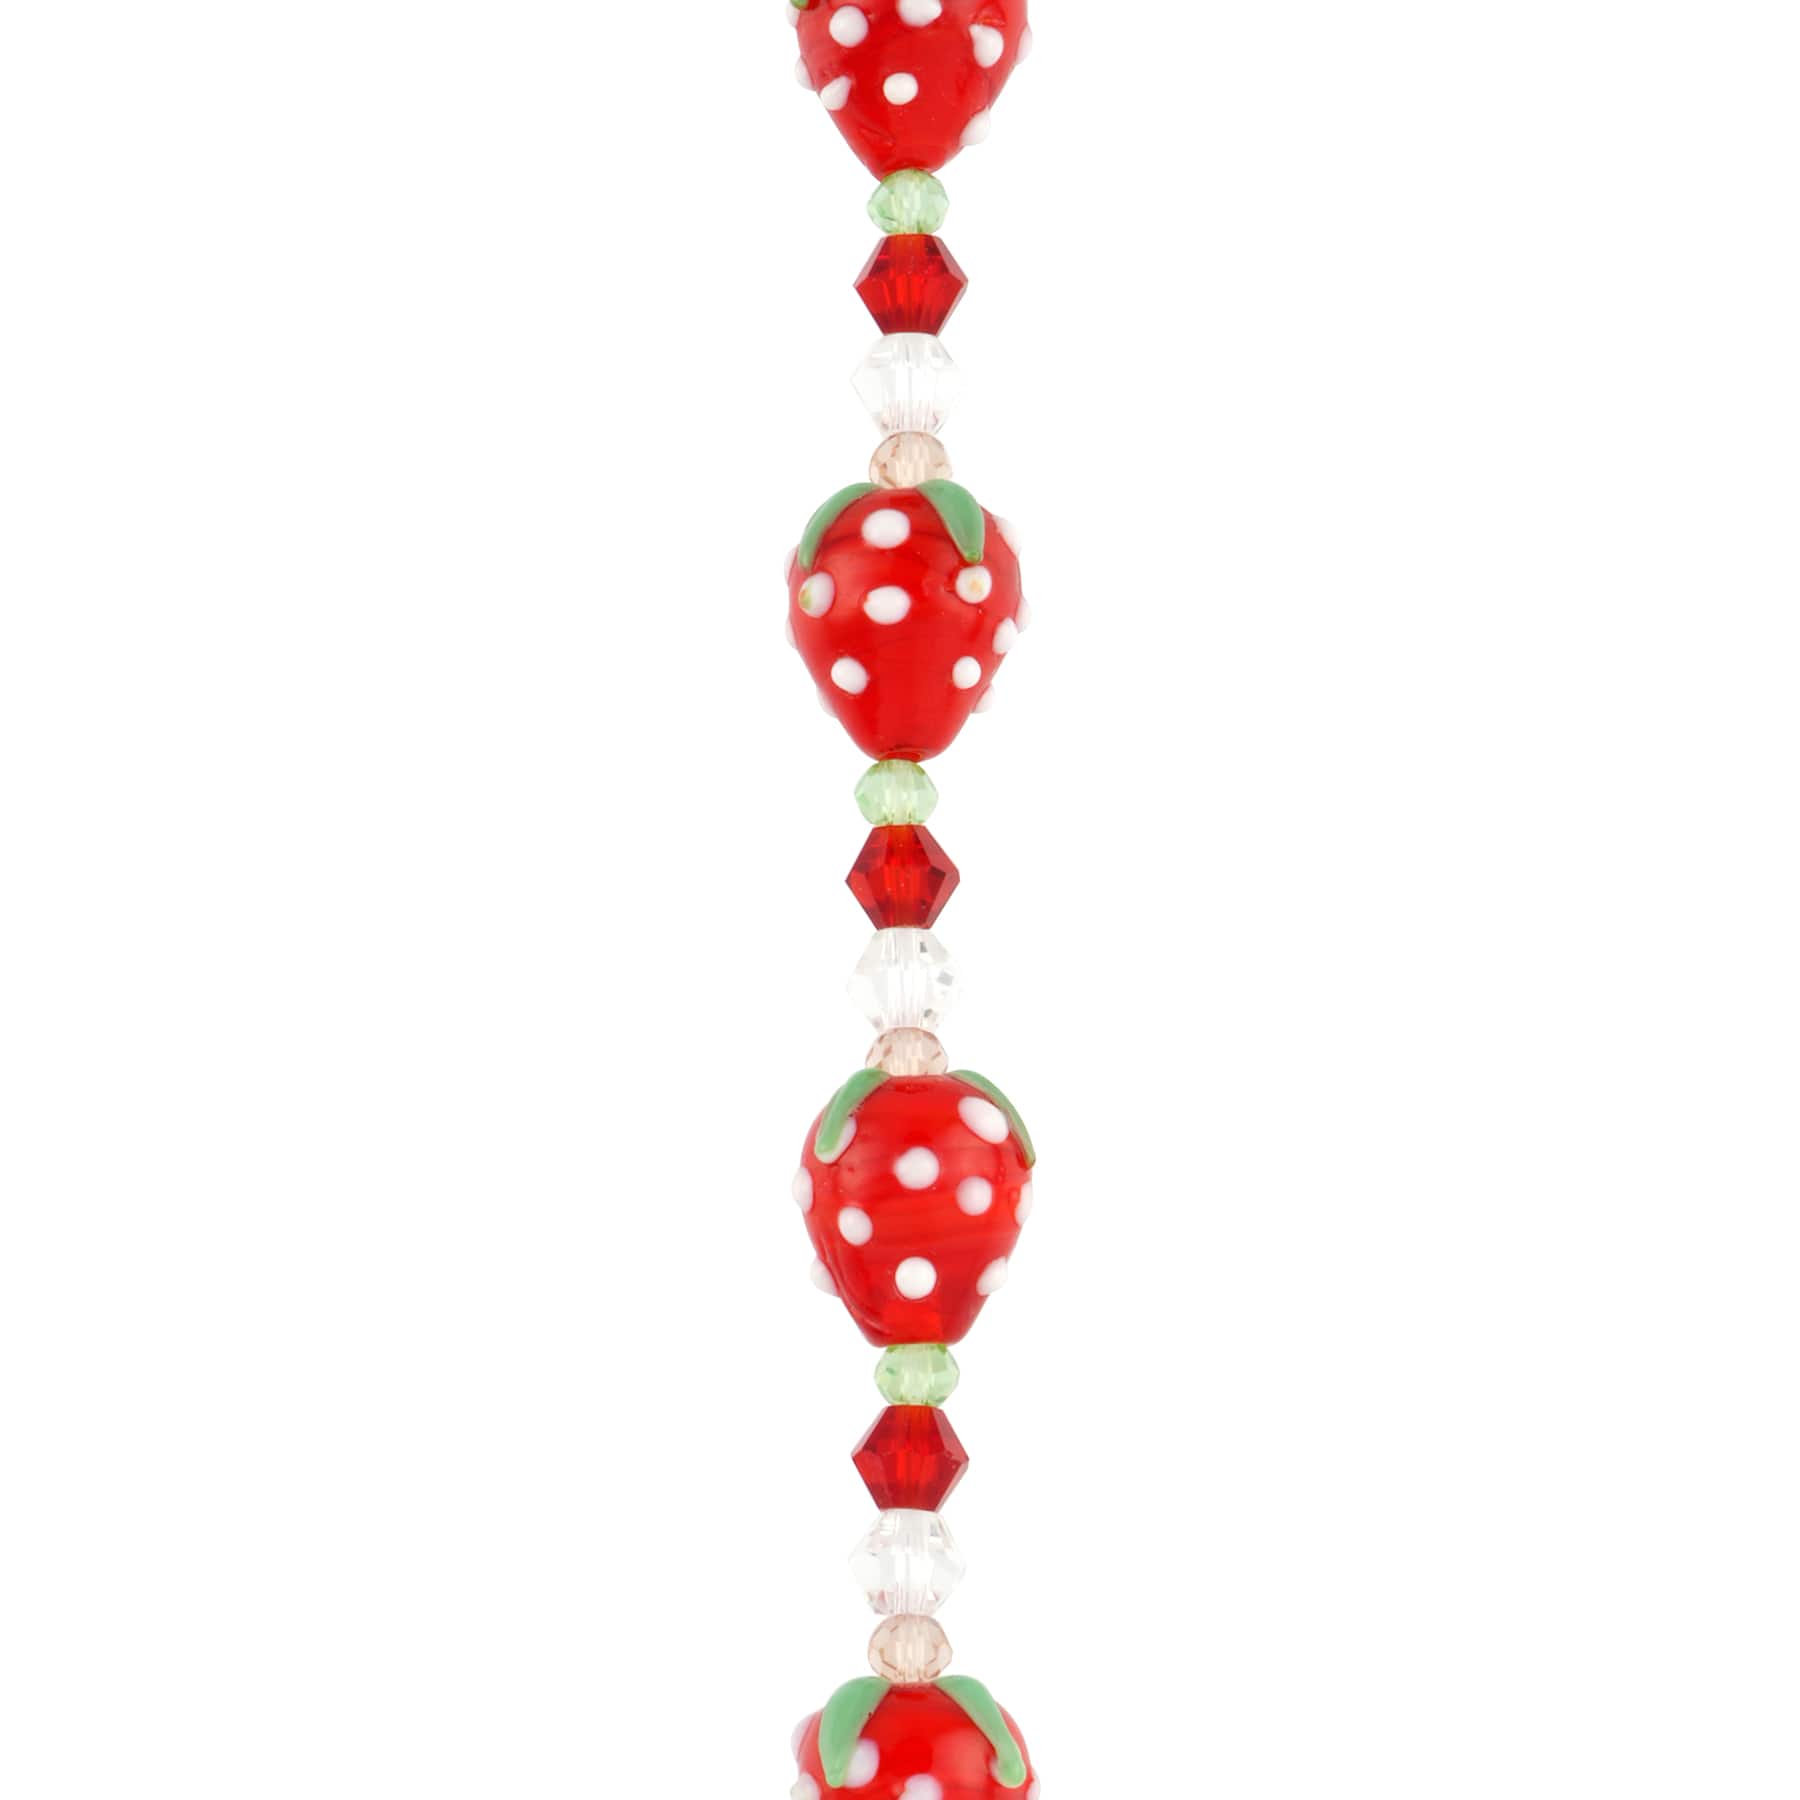 Wholesale Handmade Lampwork 3D Strawberry Beads 